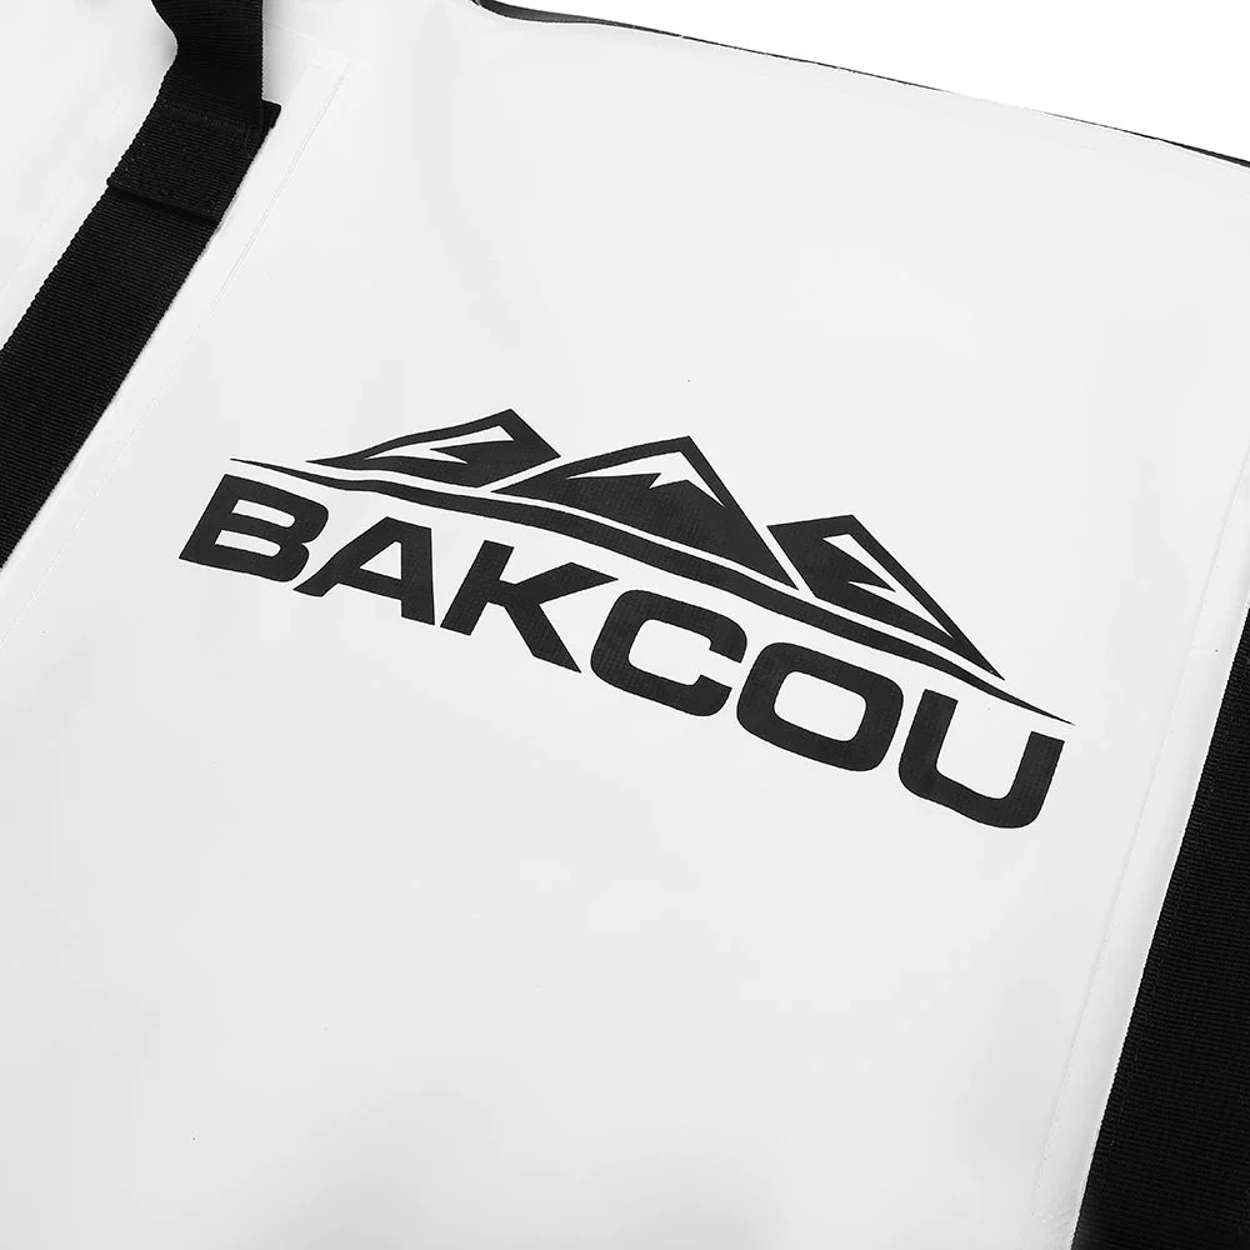 Bakcou Insulated Game-Gear Bags